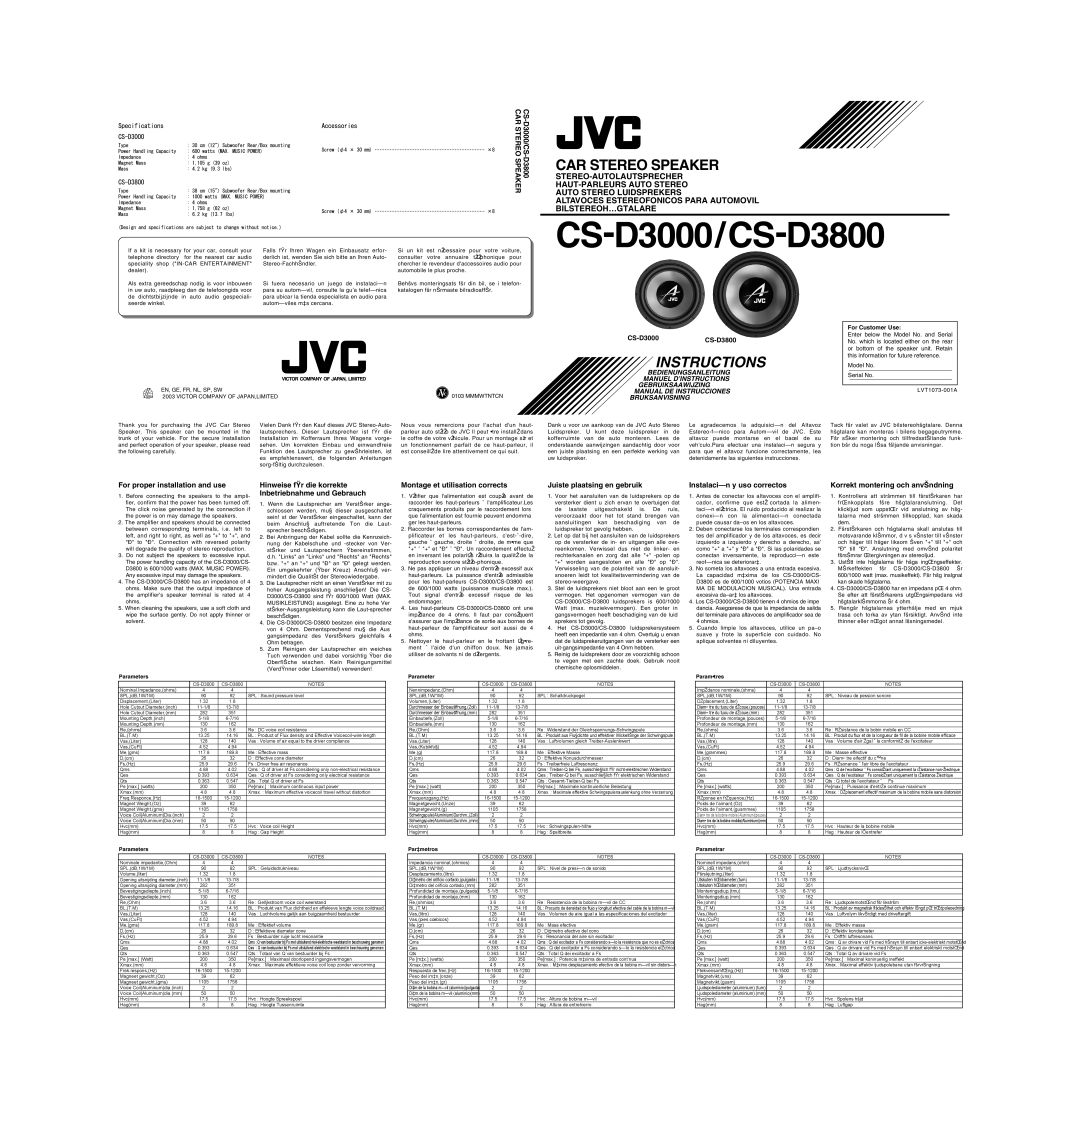 JVC CS-D3800 manual For proper installation and use, Hinweise fŸr die korrekte Inbetriebnahme und Gebrauch, CS-D3000 